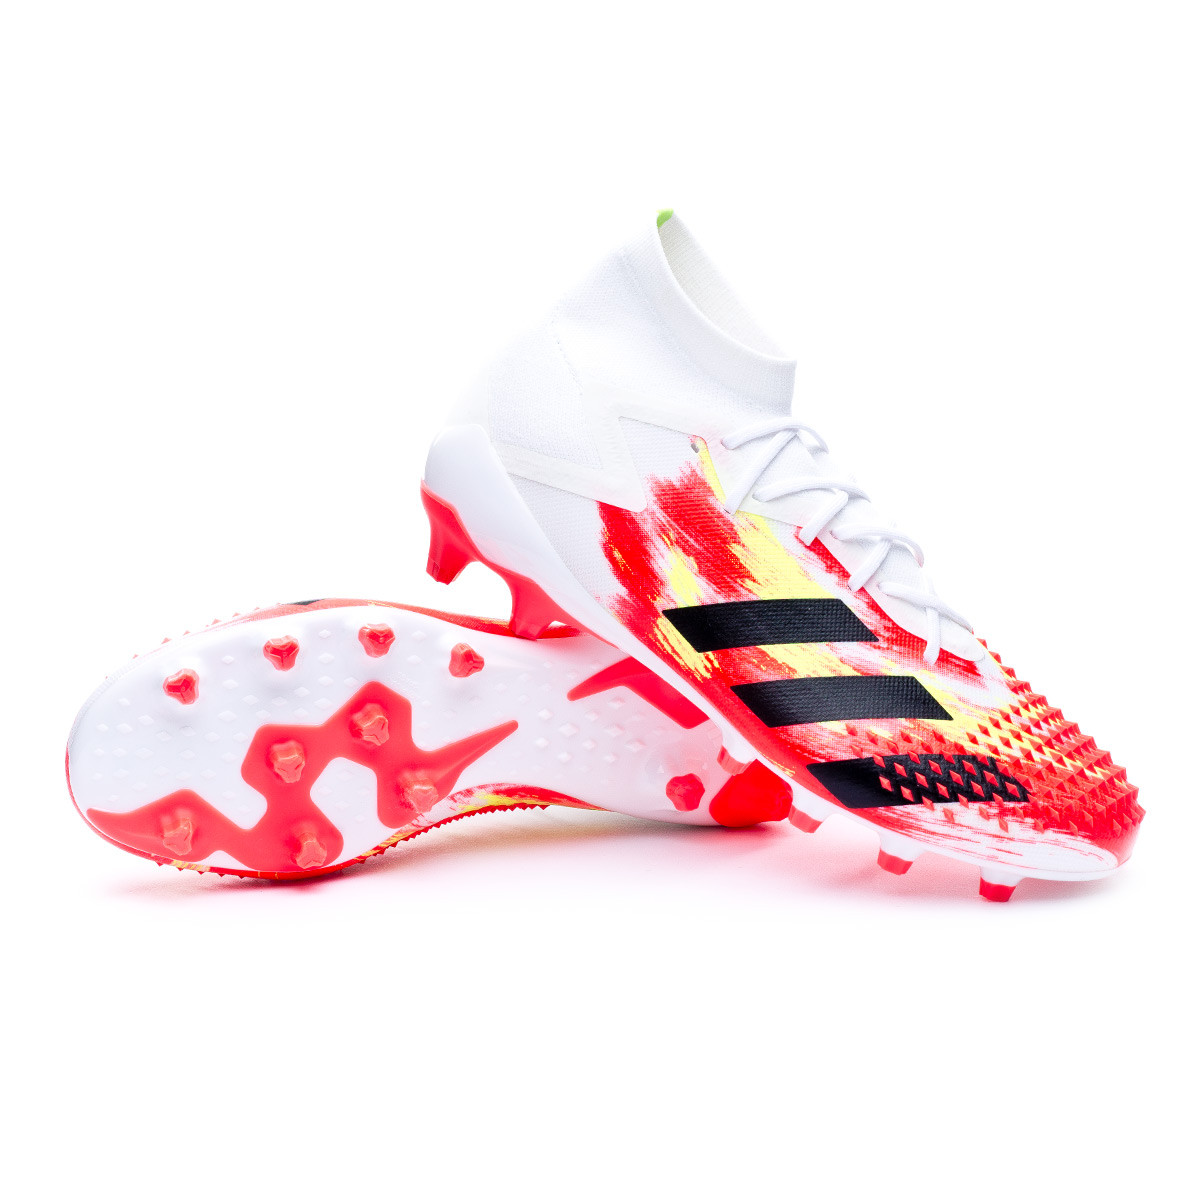 Football Boots adidas Predator 20.1 AG 